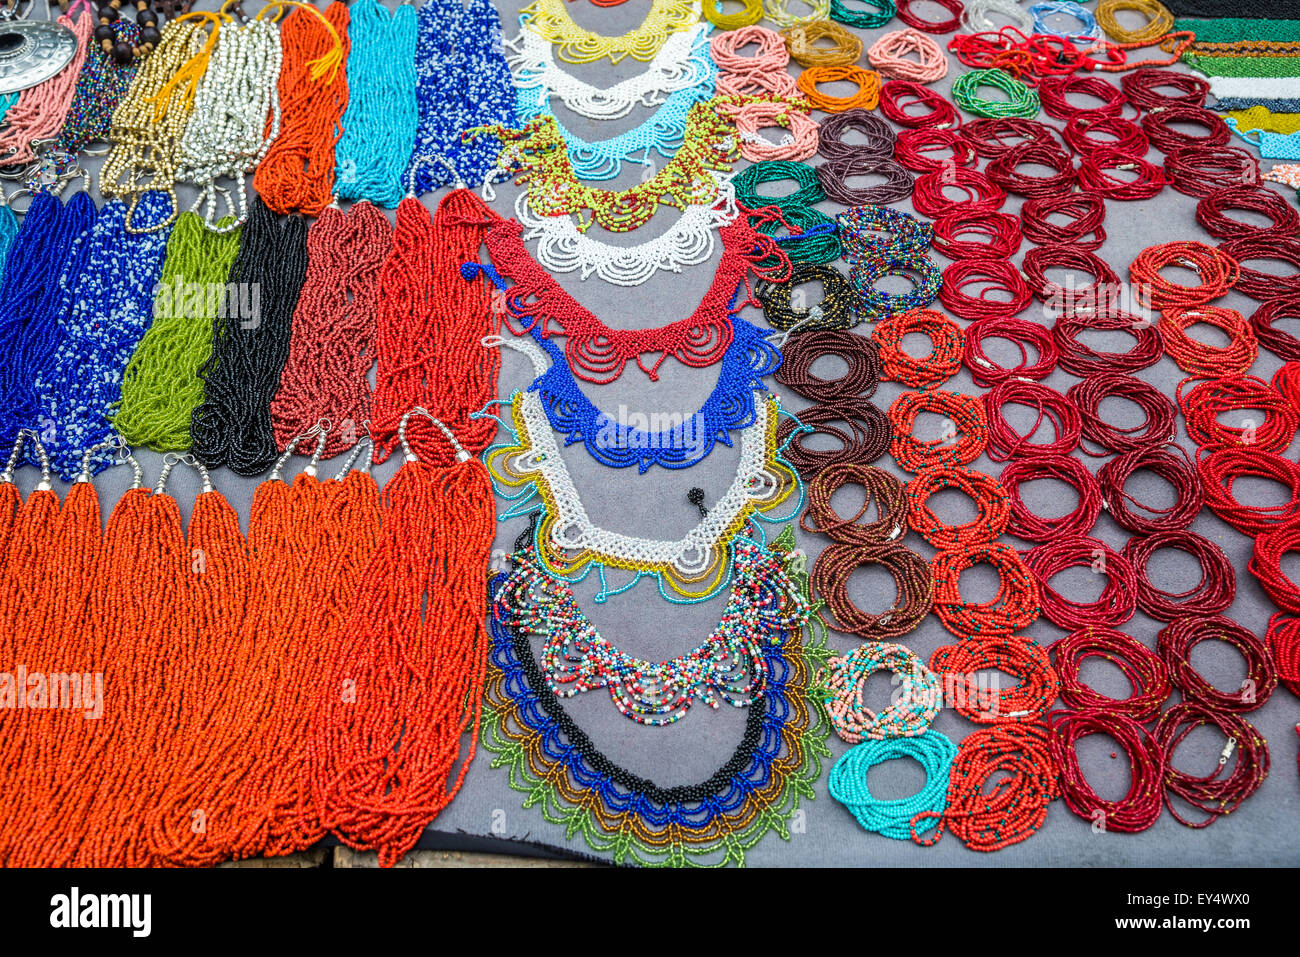 Jewelry otavalo ecuador market hi-res stock photography and images - Alamy